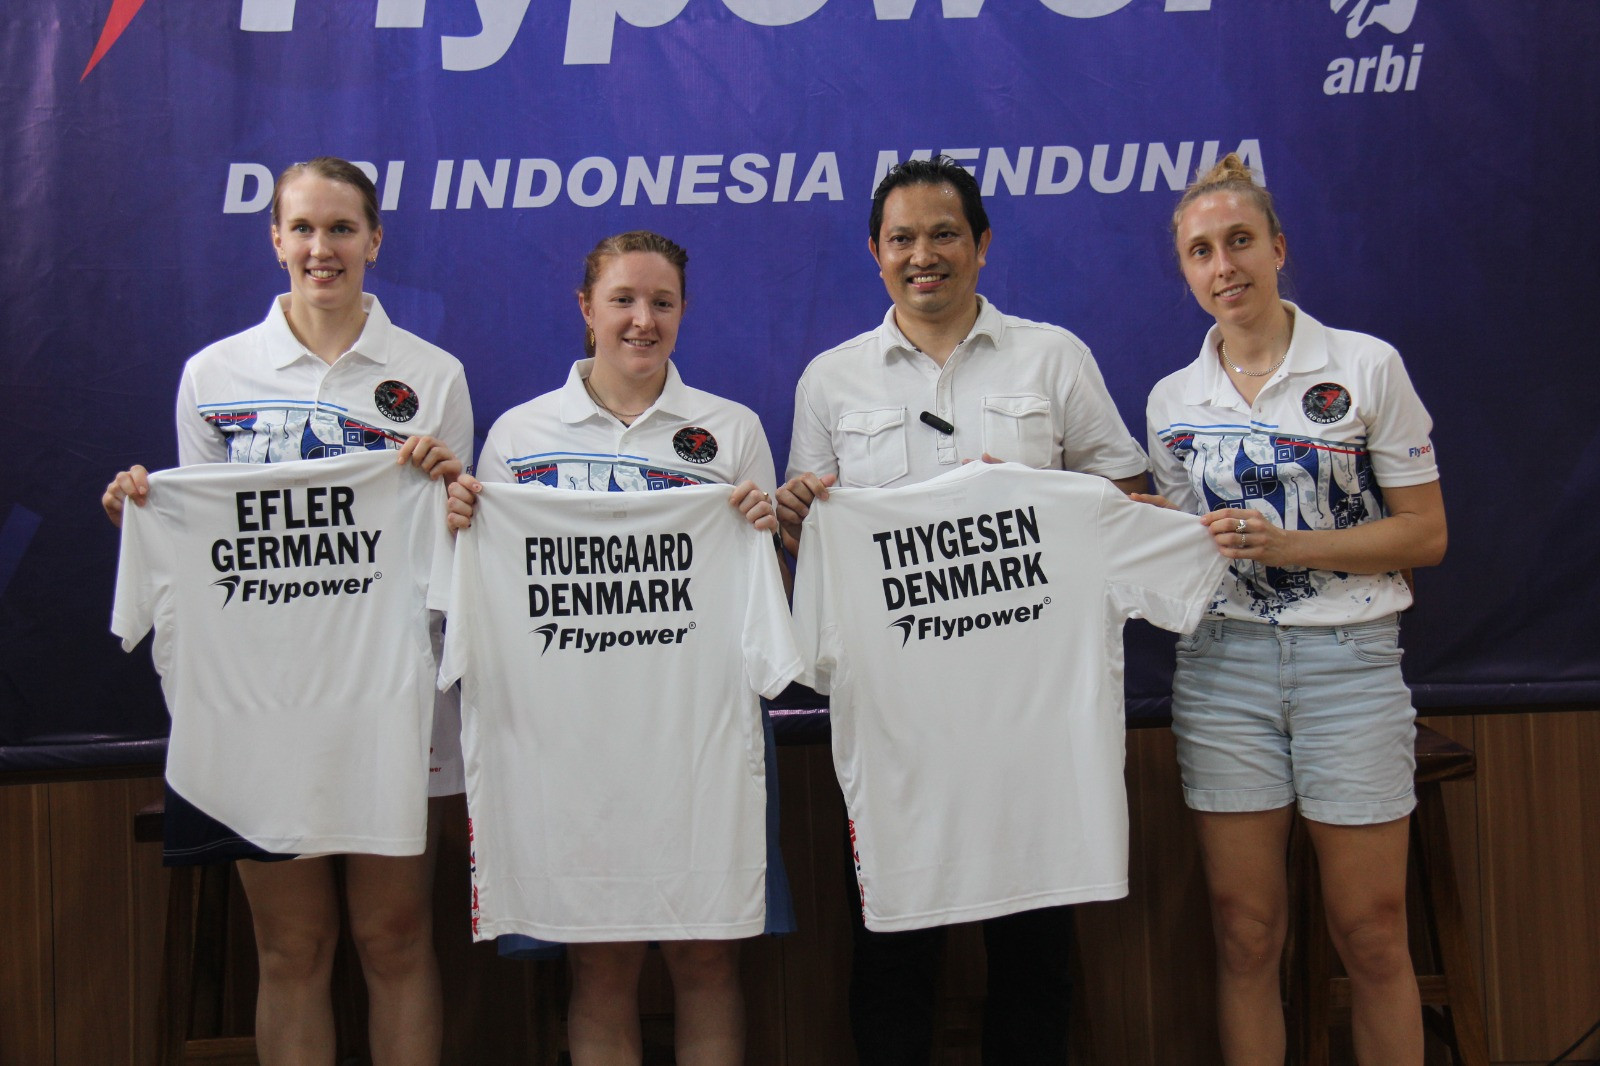 produk indonesia mendunia, flypower kontrak 3 pebulu tangkis denmark